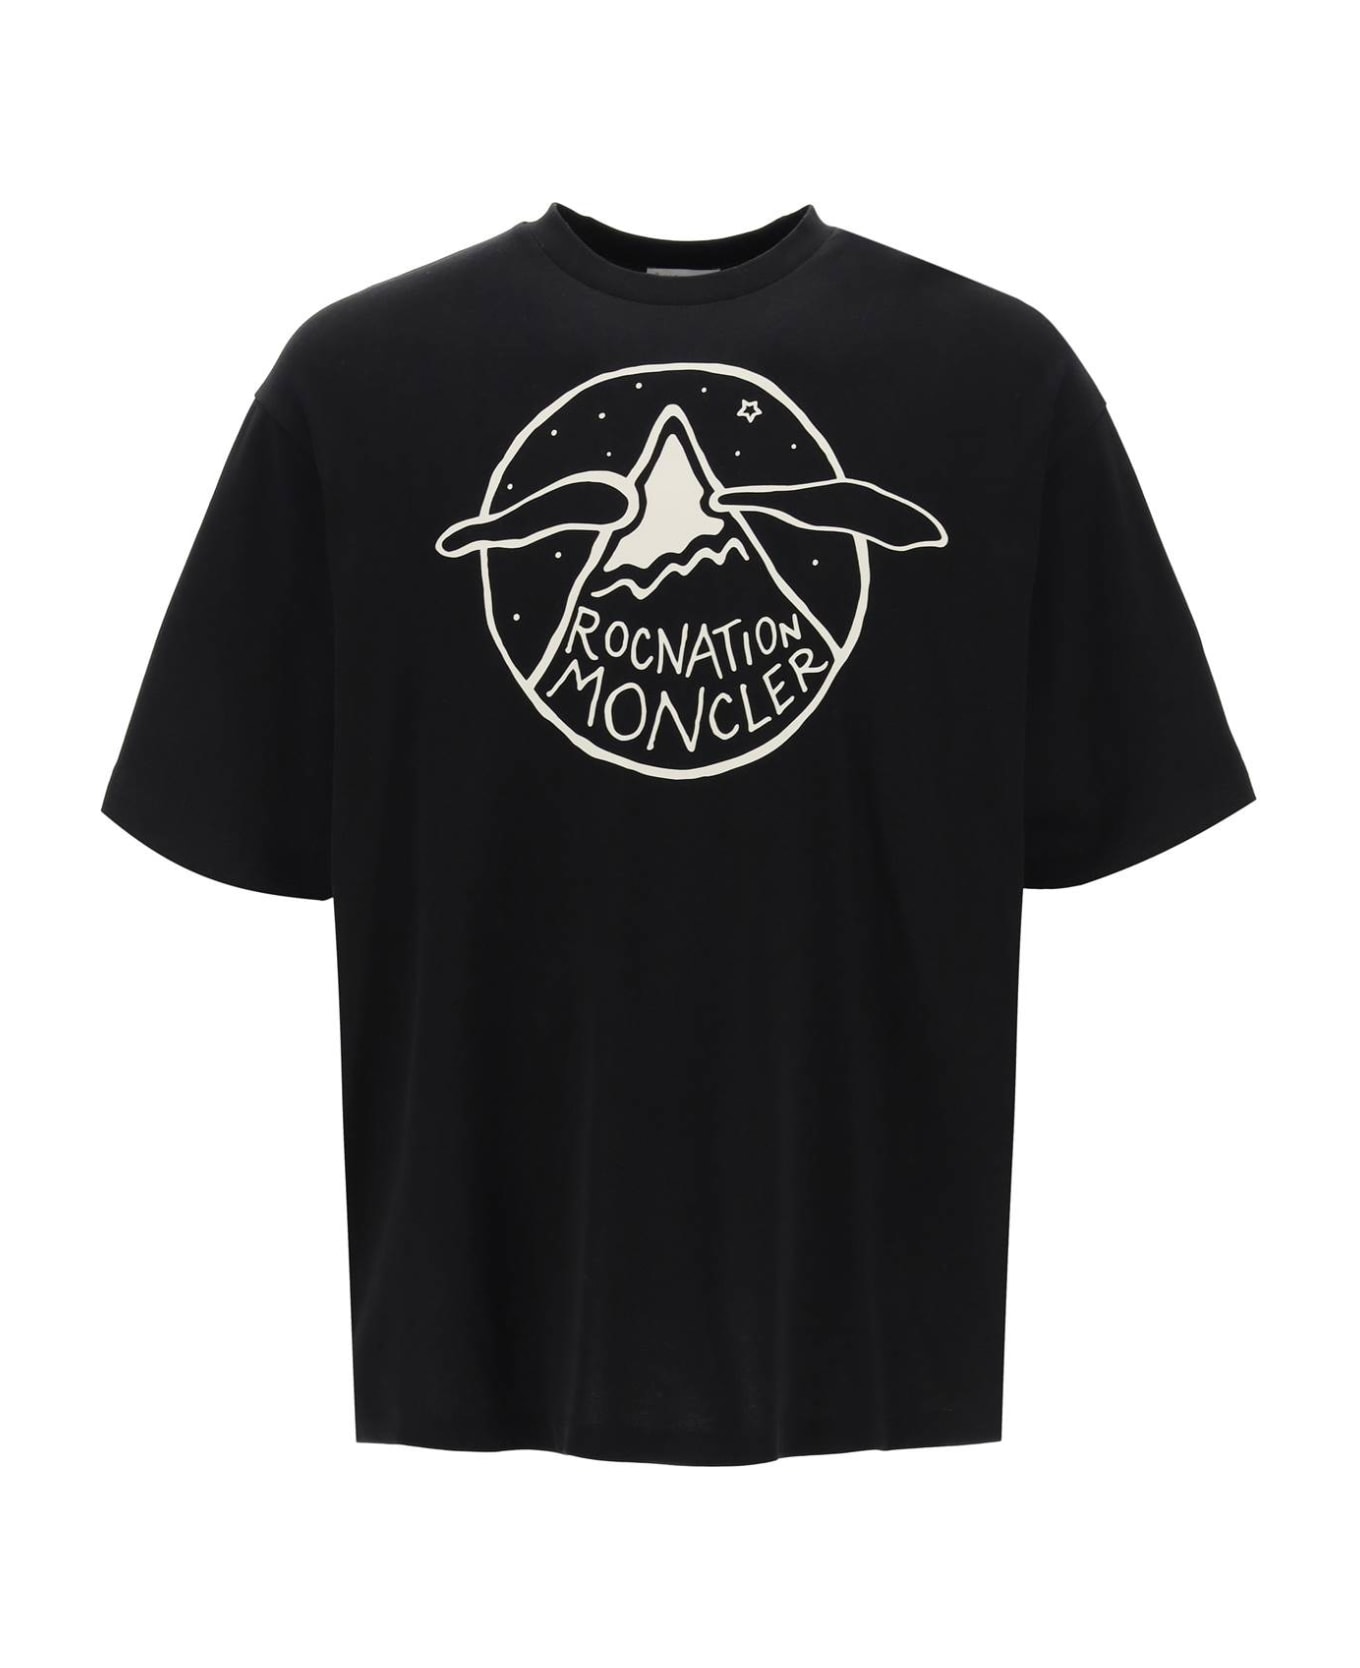 Moncler Genius T-shirt With Graphic Print - Black